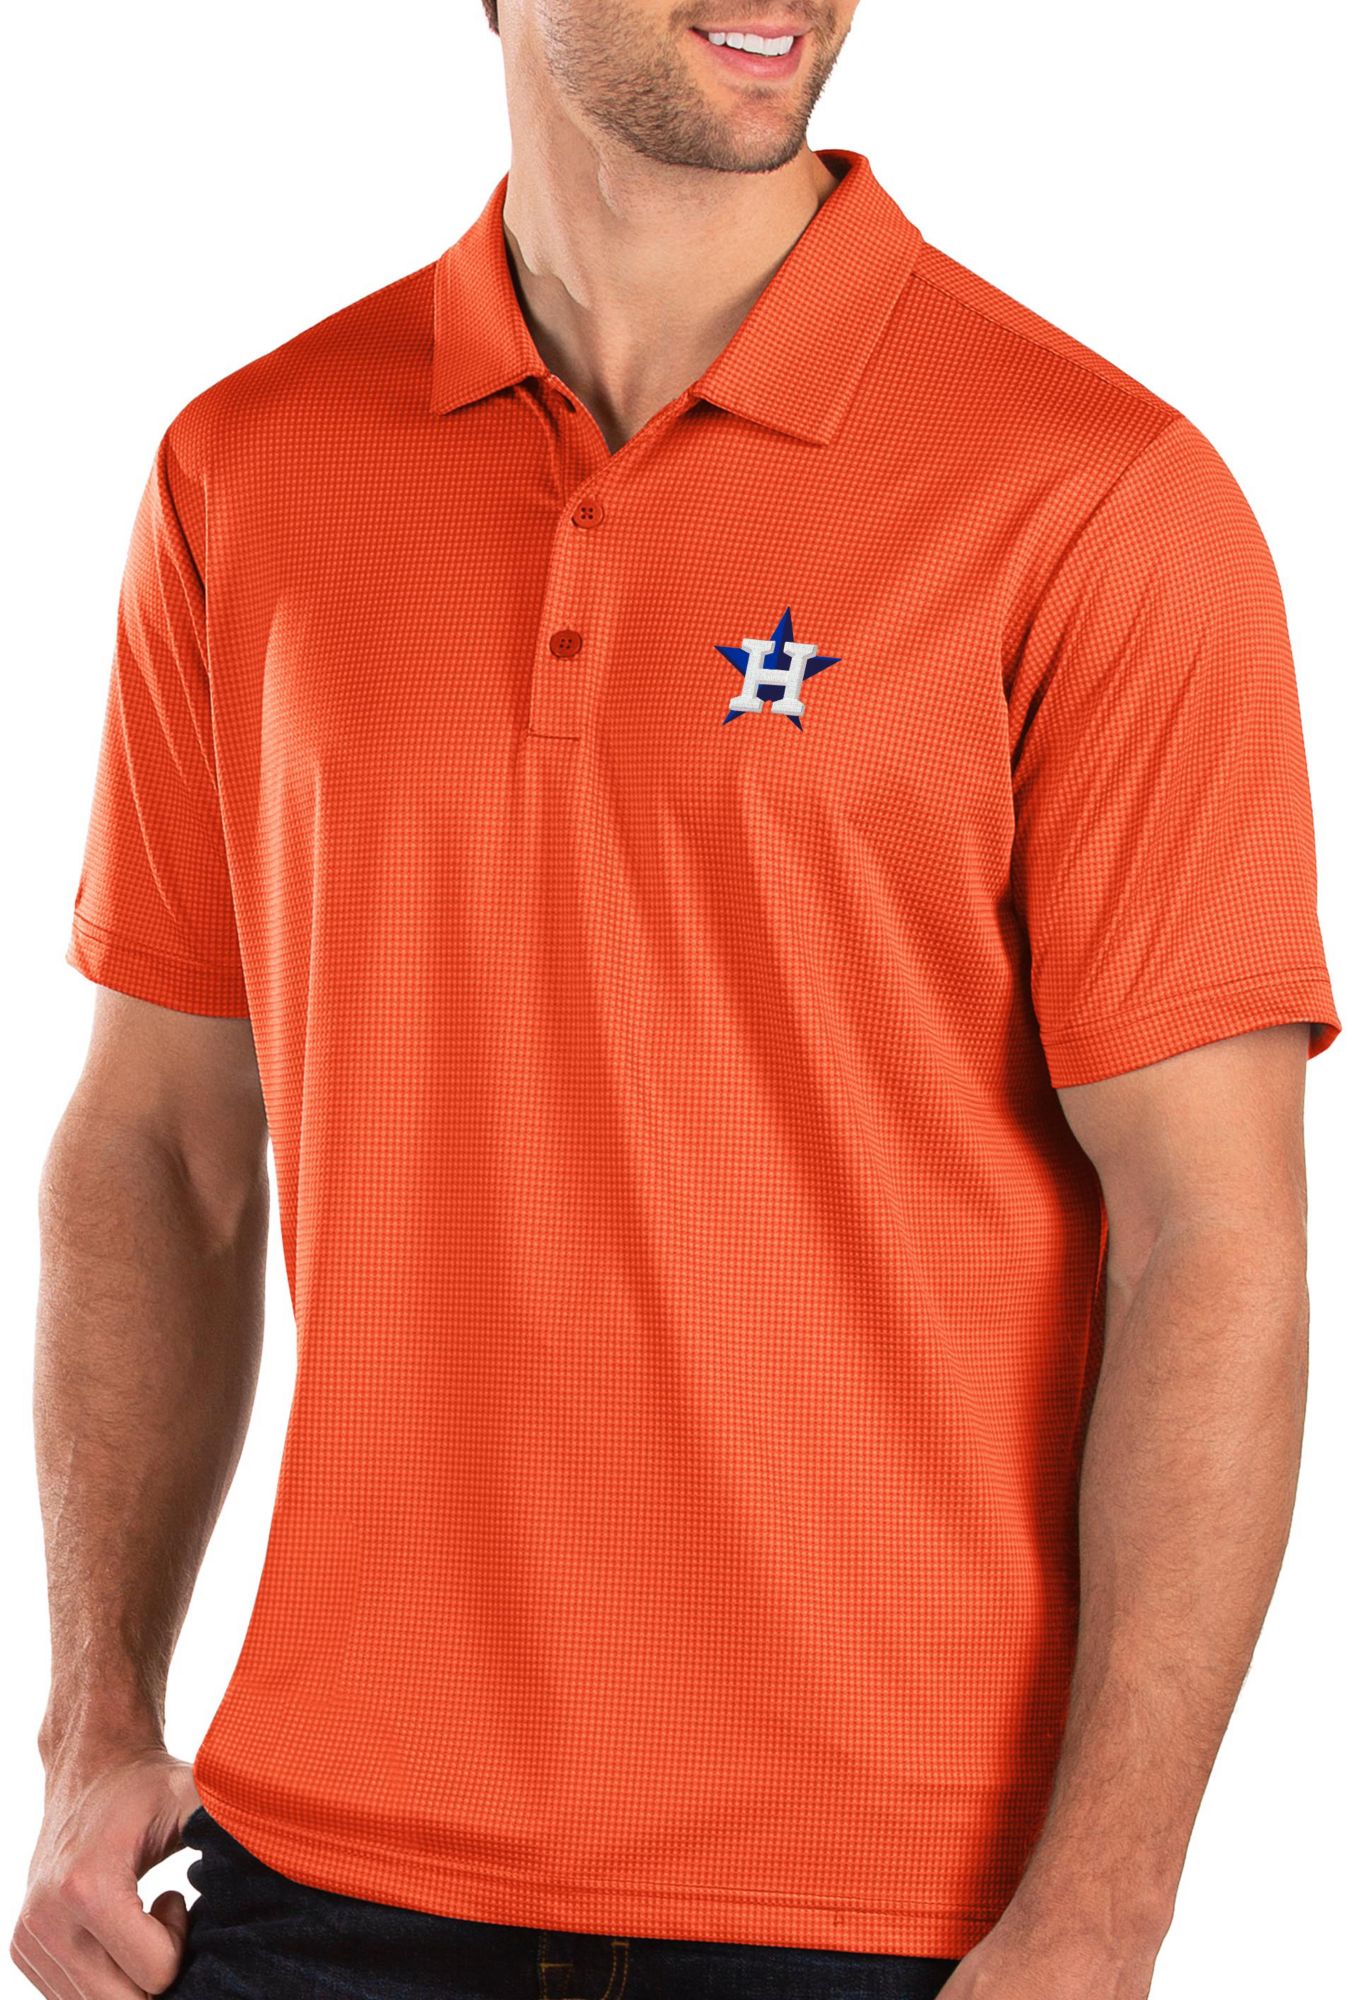 Houston Astros Mens Apparel, Mens Astros Clothing, Merchandise